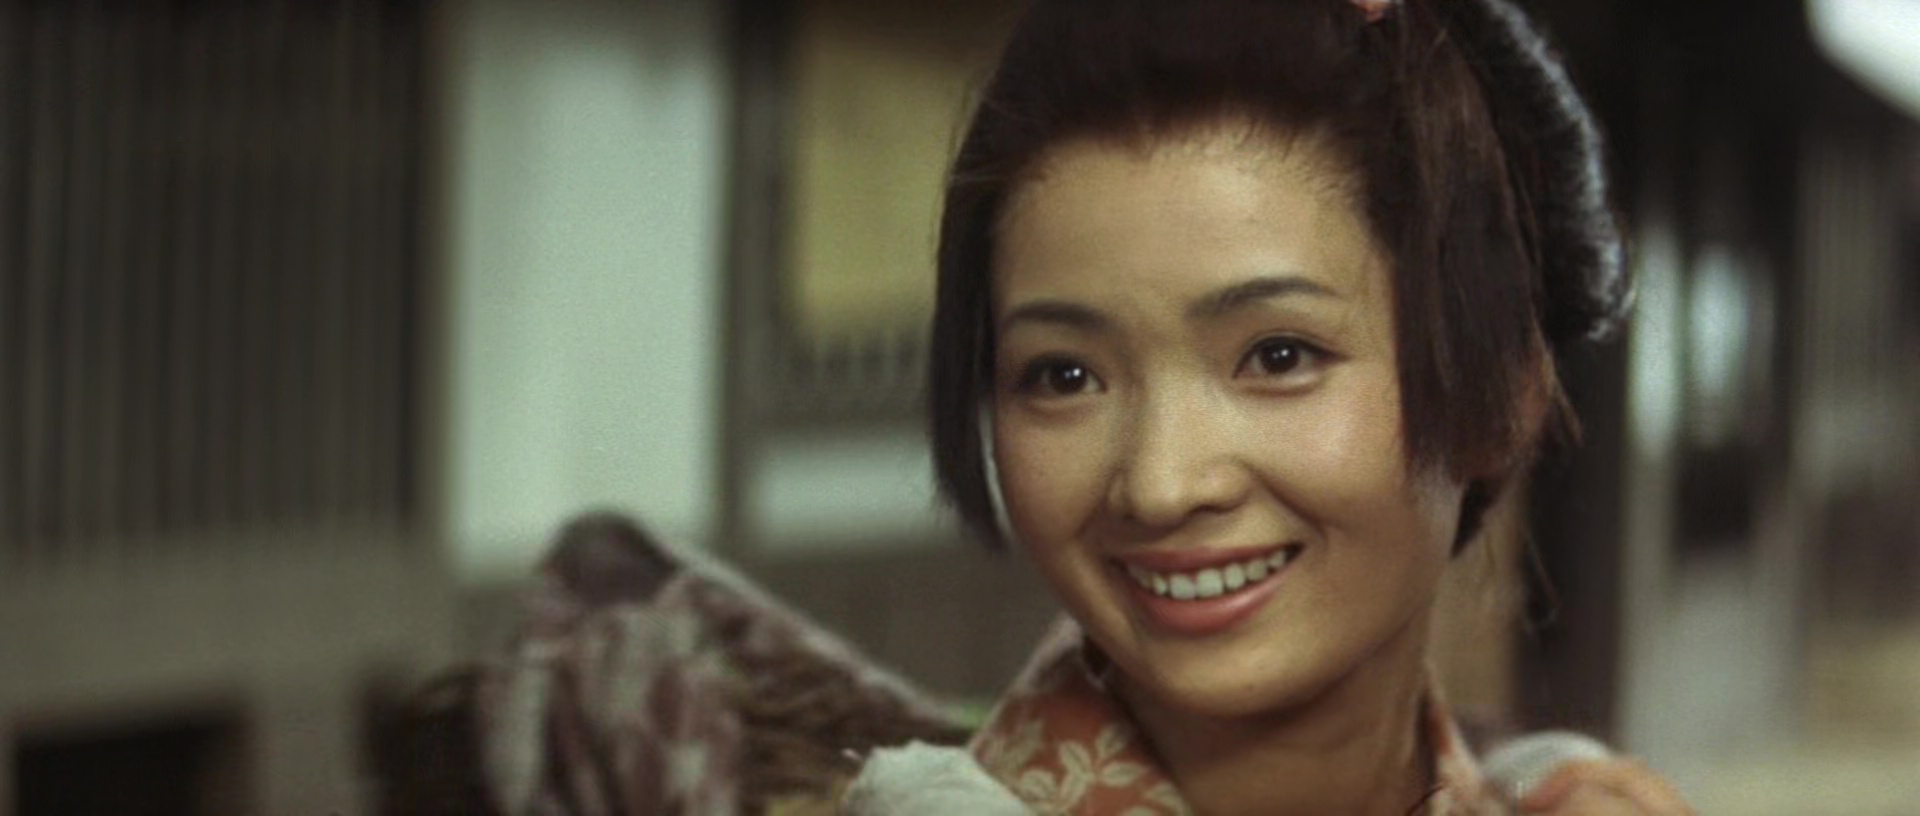 Ken ki (1965) Screenshot 1